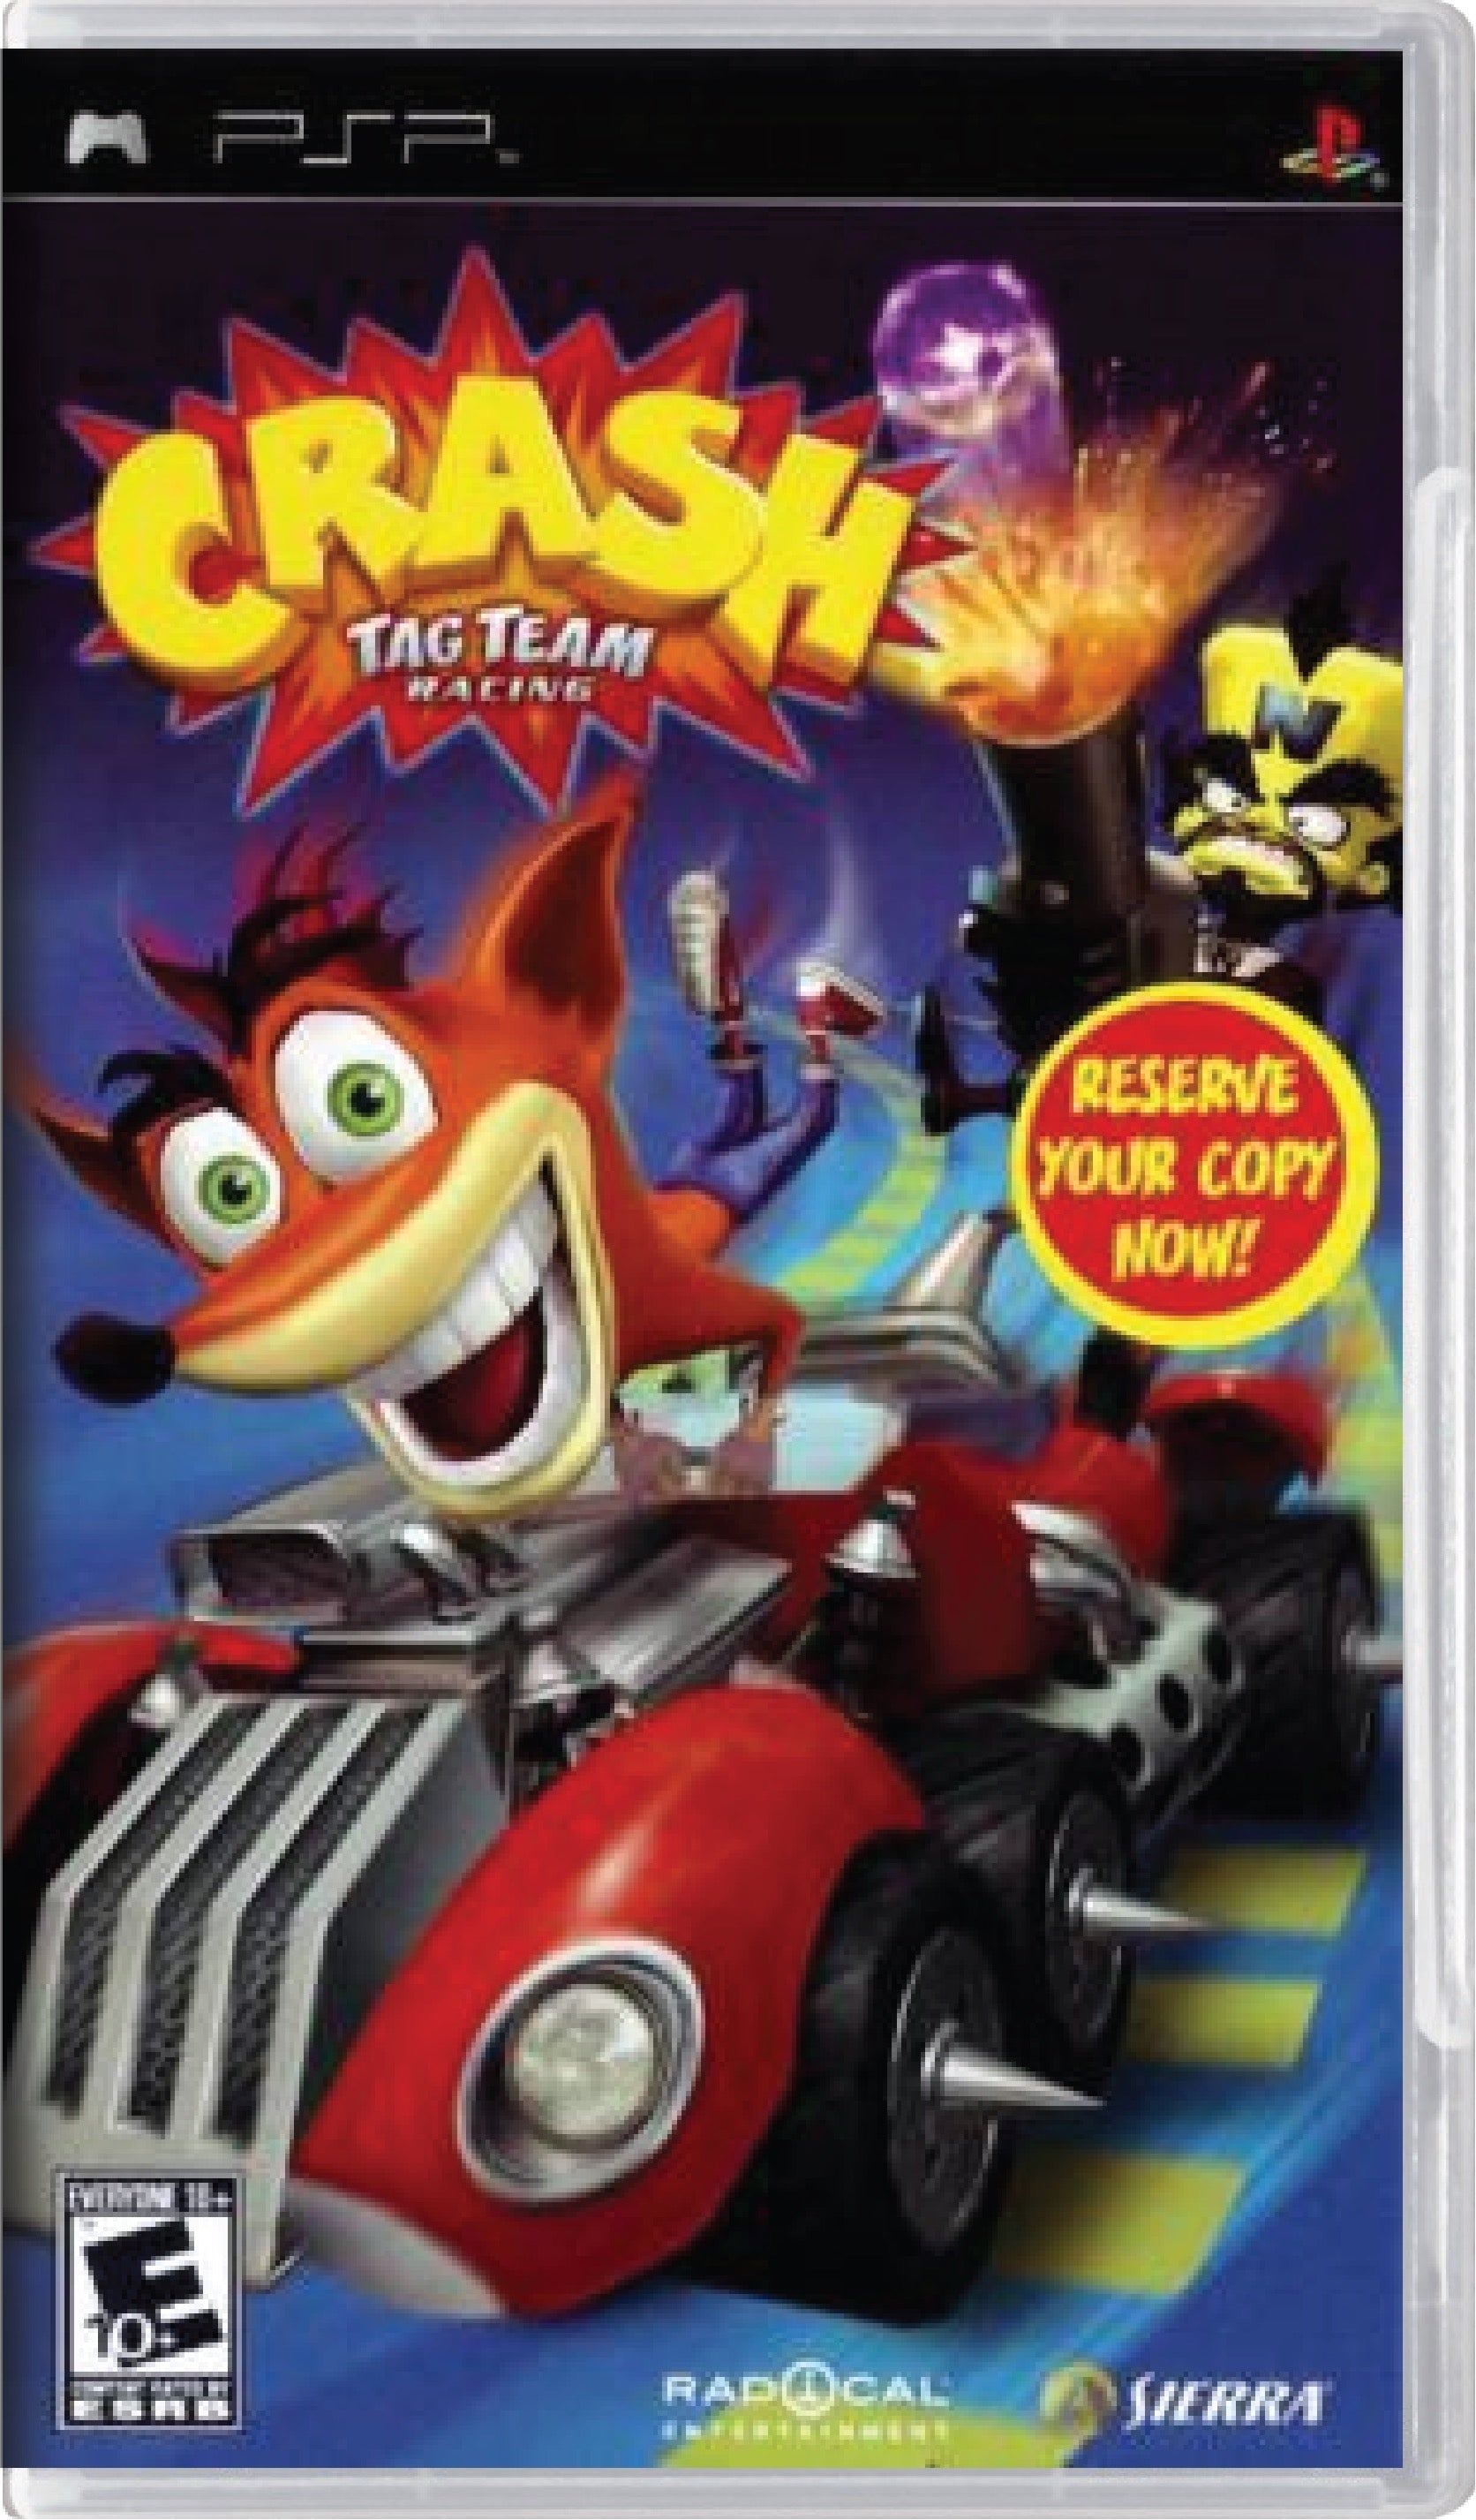 Crash Tag Team Racing Cover Art